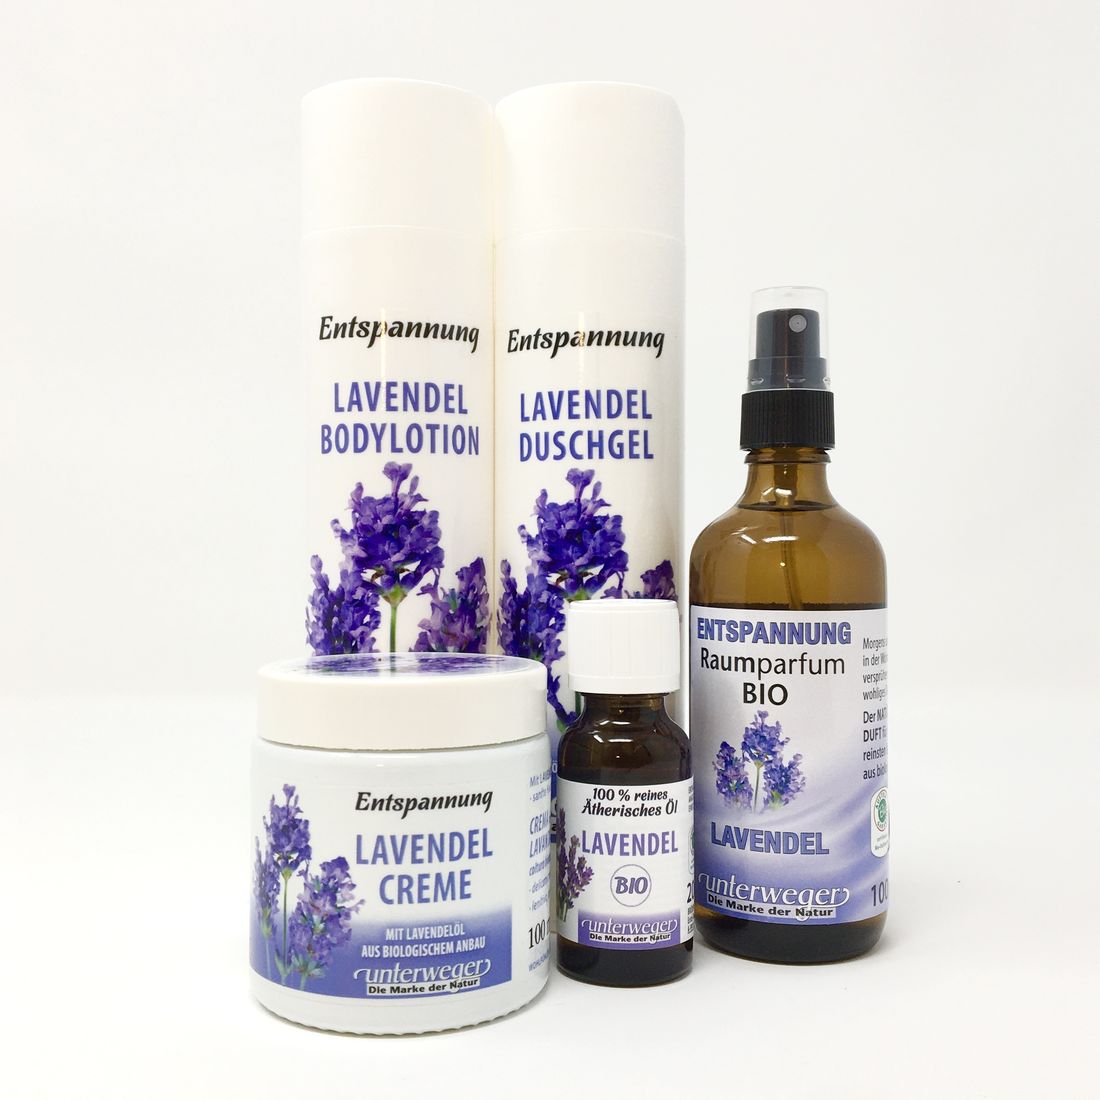 Unterweger Lavendel/Bodylotion/250 ml